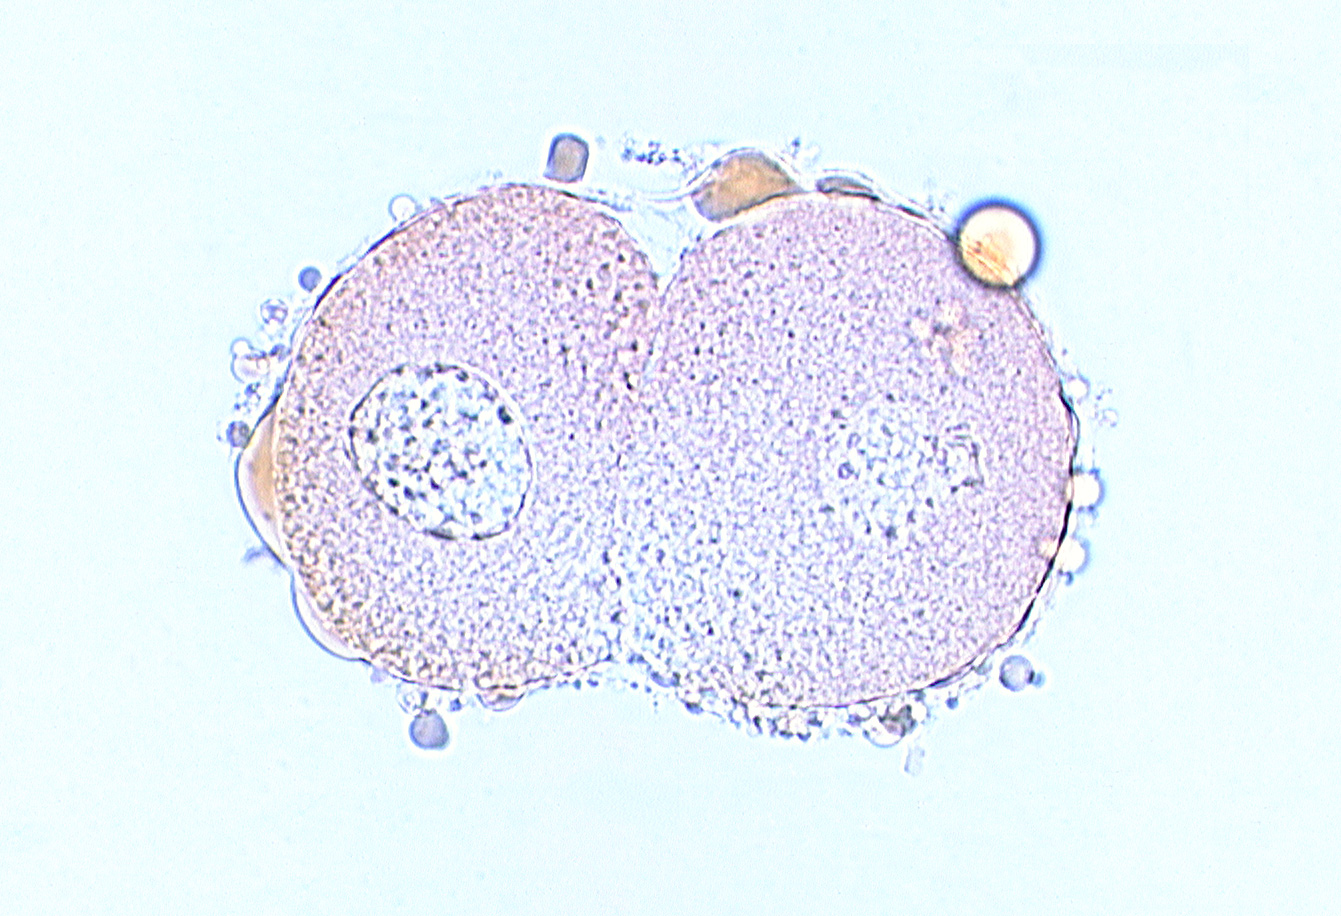 blastomere cytoplasm, blastomere nucleus, contiguous cell membranes, edge of nucleus, zona pellucida